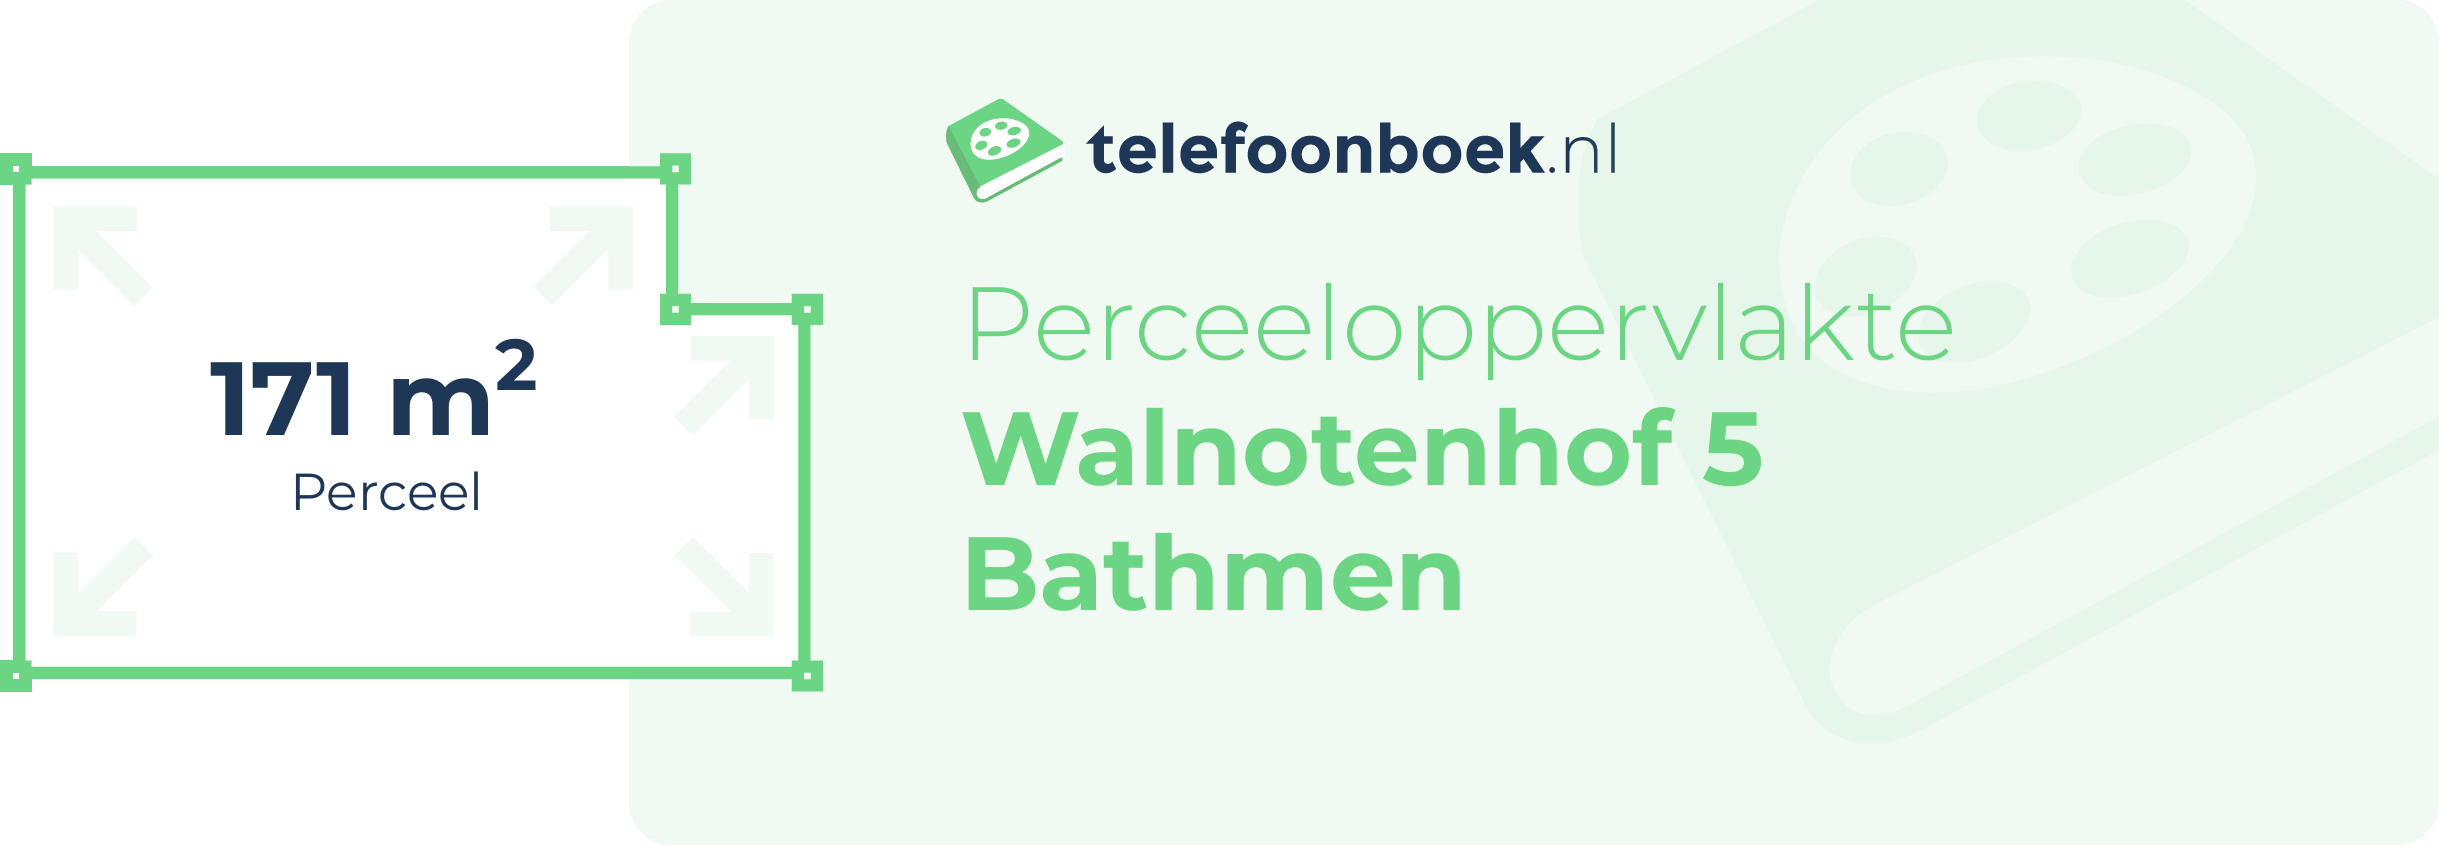 Perceeloppervlakte Walnotenhof 5 Bathmen